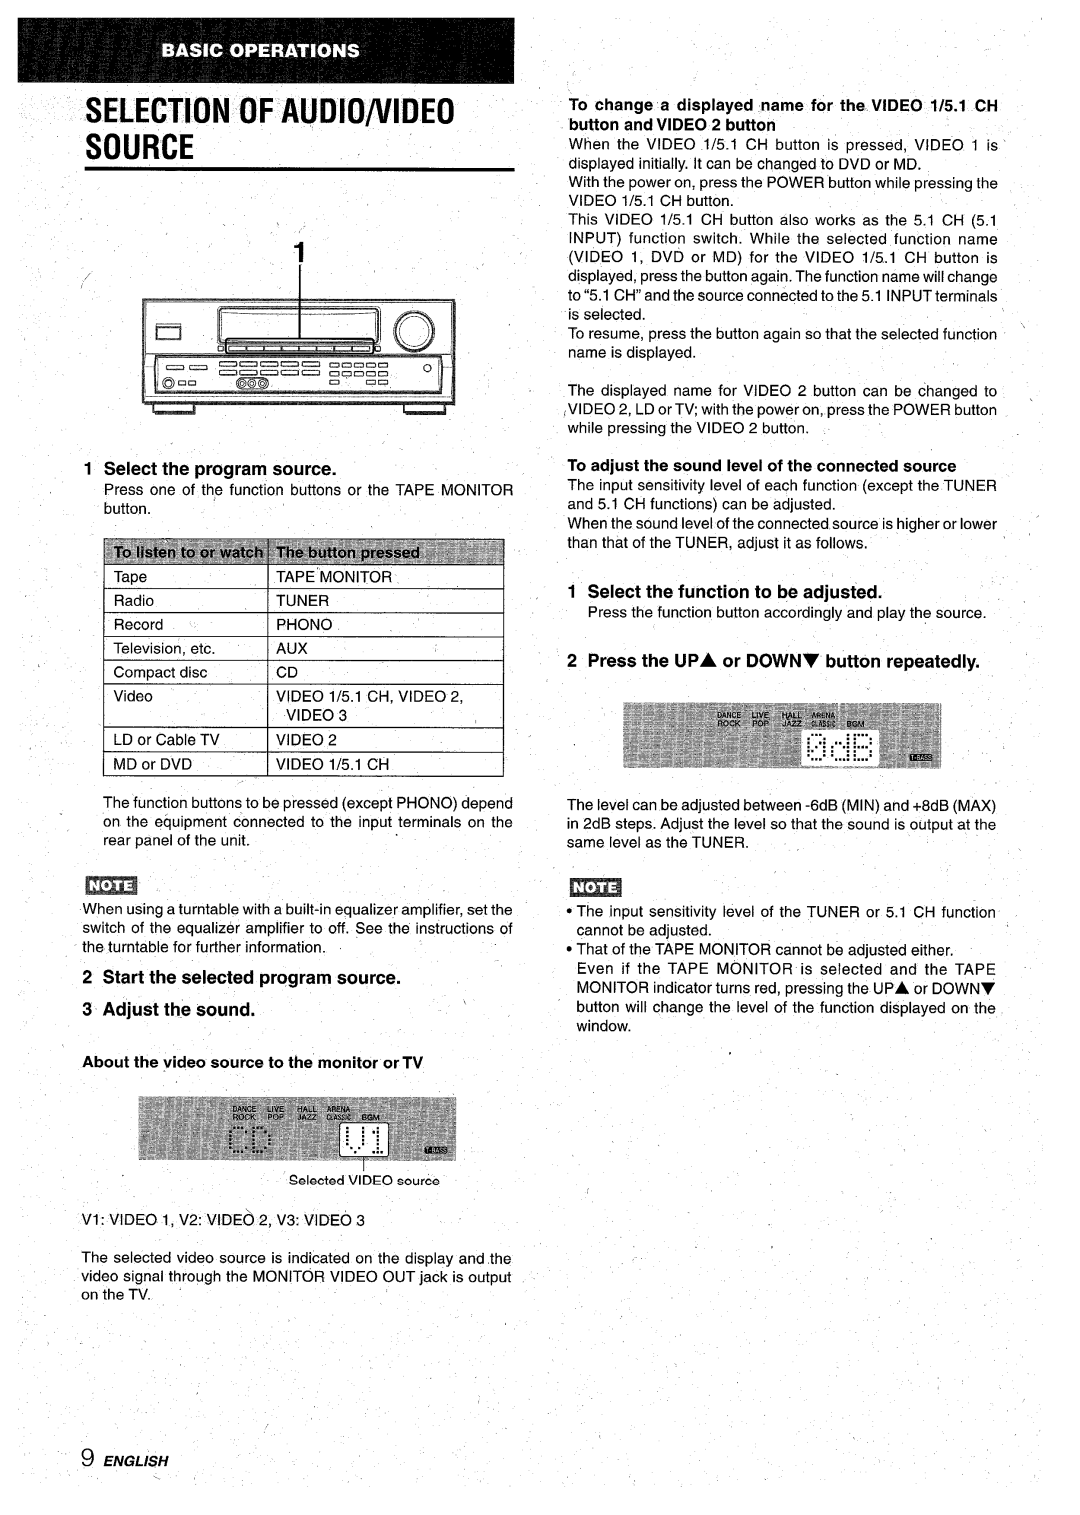 Aiwa AV-D30 manual Selection Of Audio/Video Source, Select the program source, Select the function to be adjusted, English 